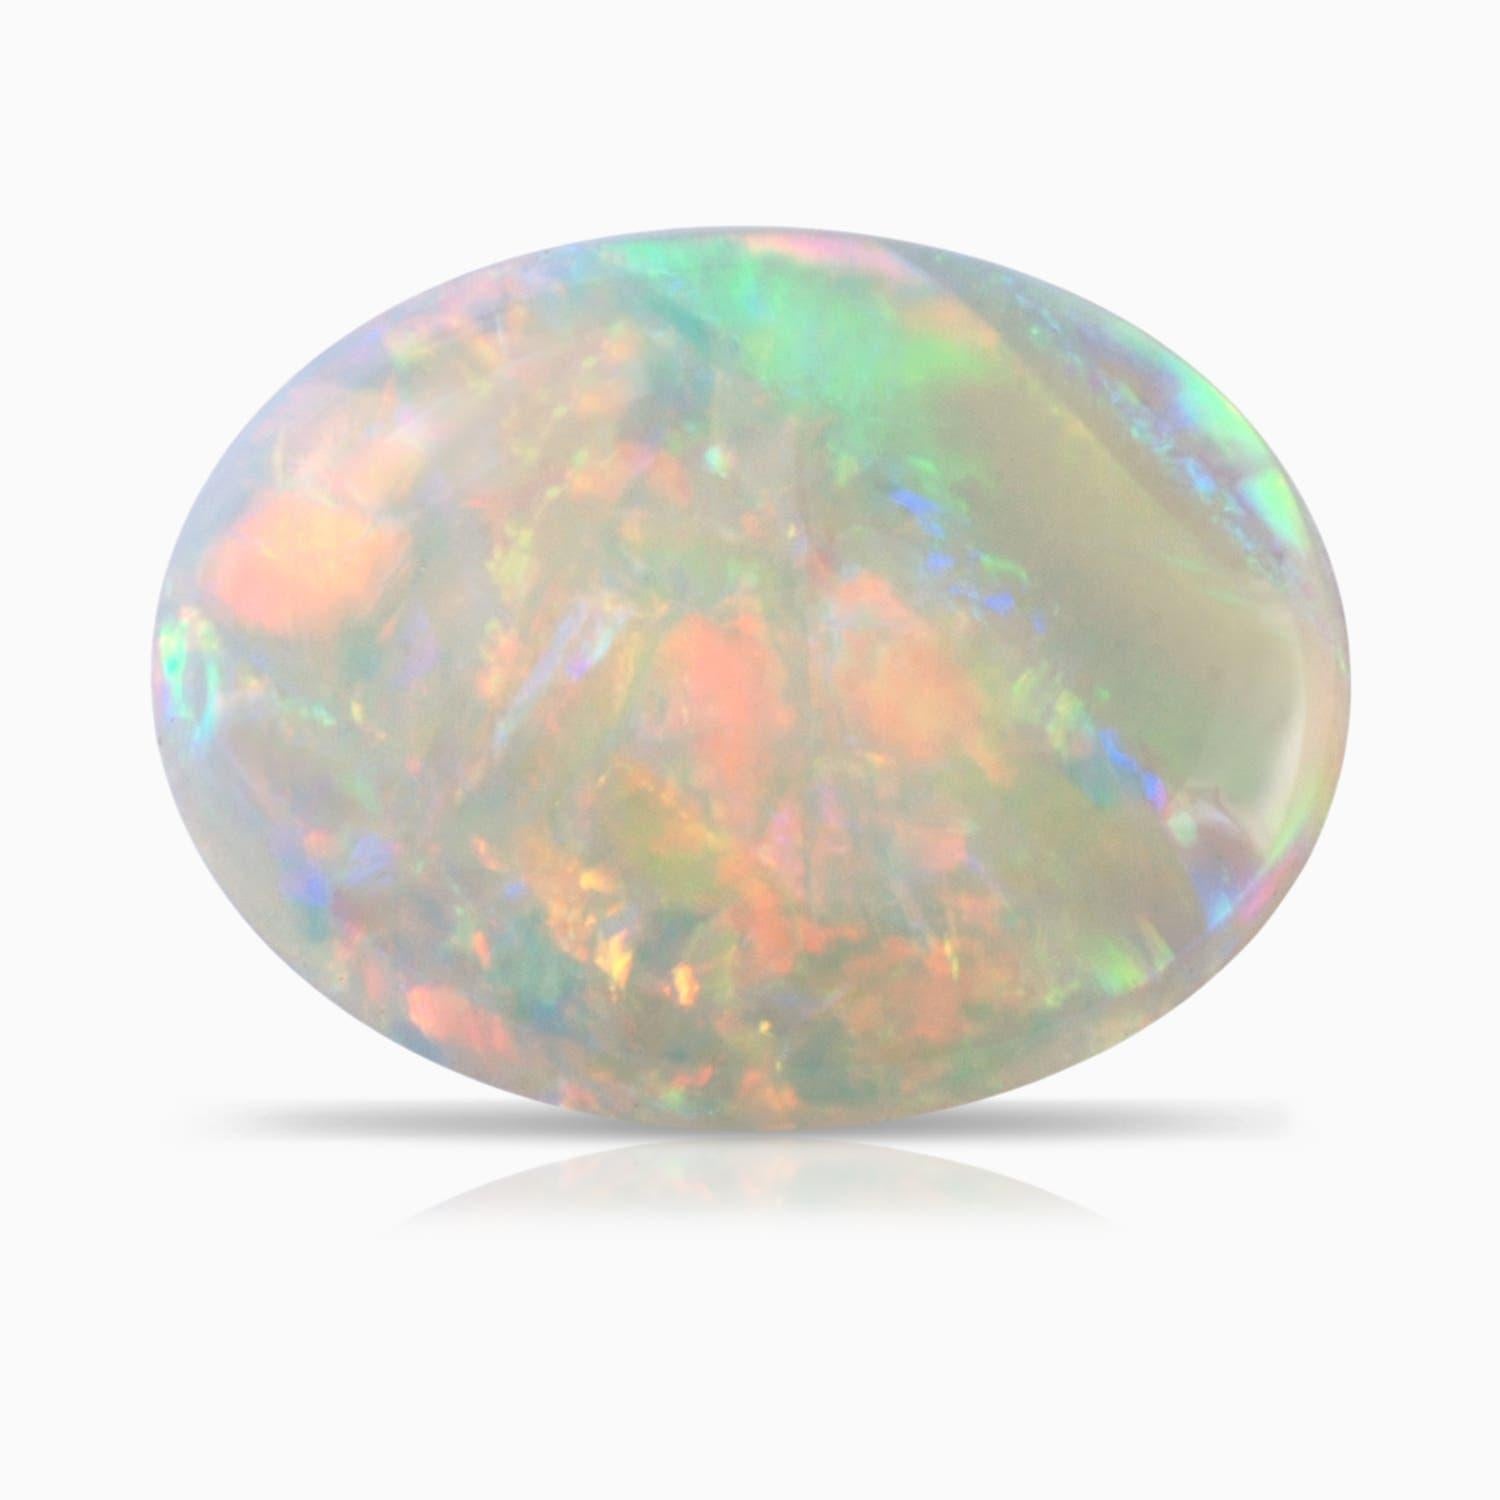 Im Angebot: ANGARA GIA zertifizierter Solitär 8,05 Karat ovaler Opal Ring mit geteiltem Schaft aus Platin () 6